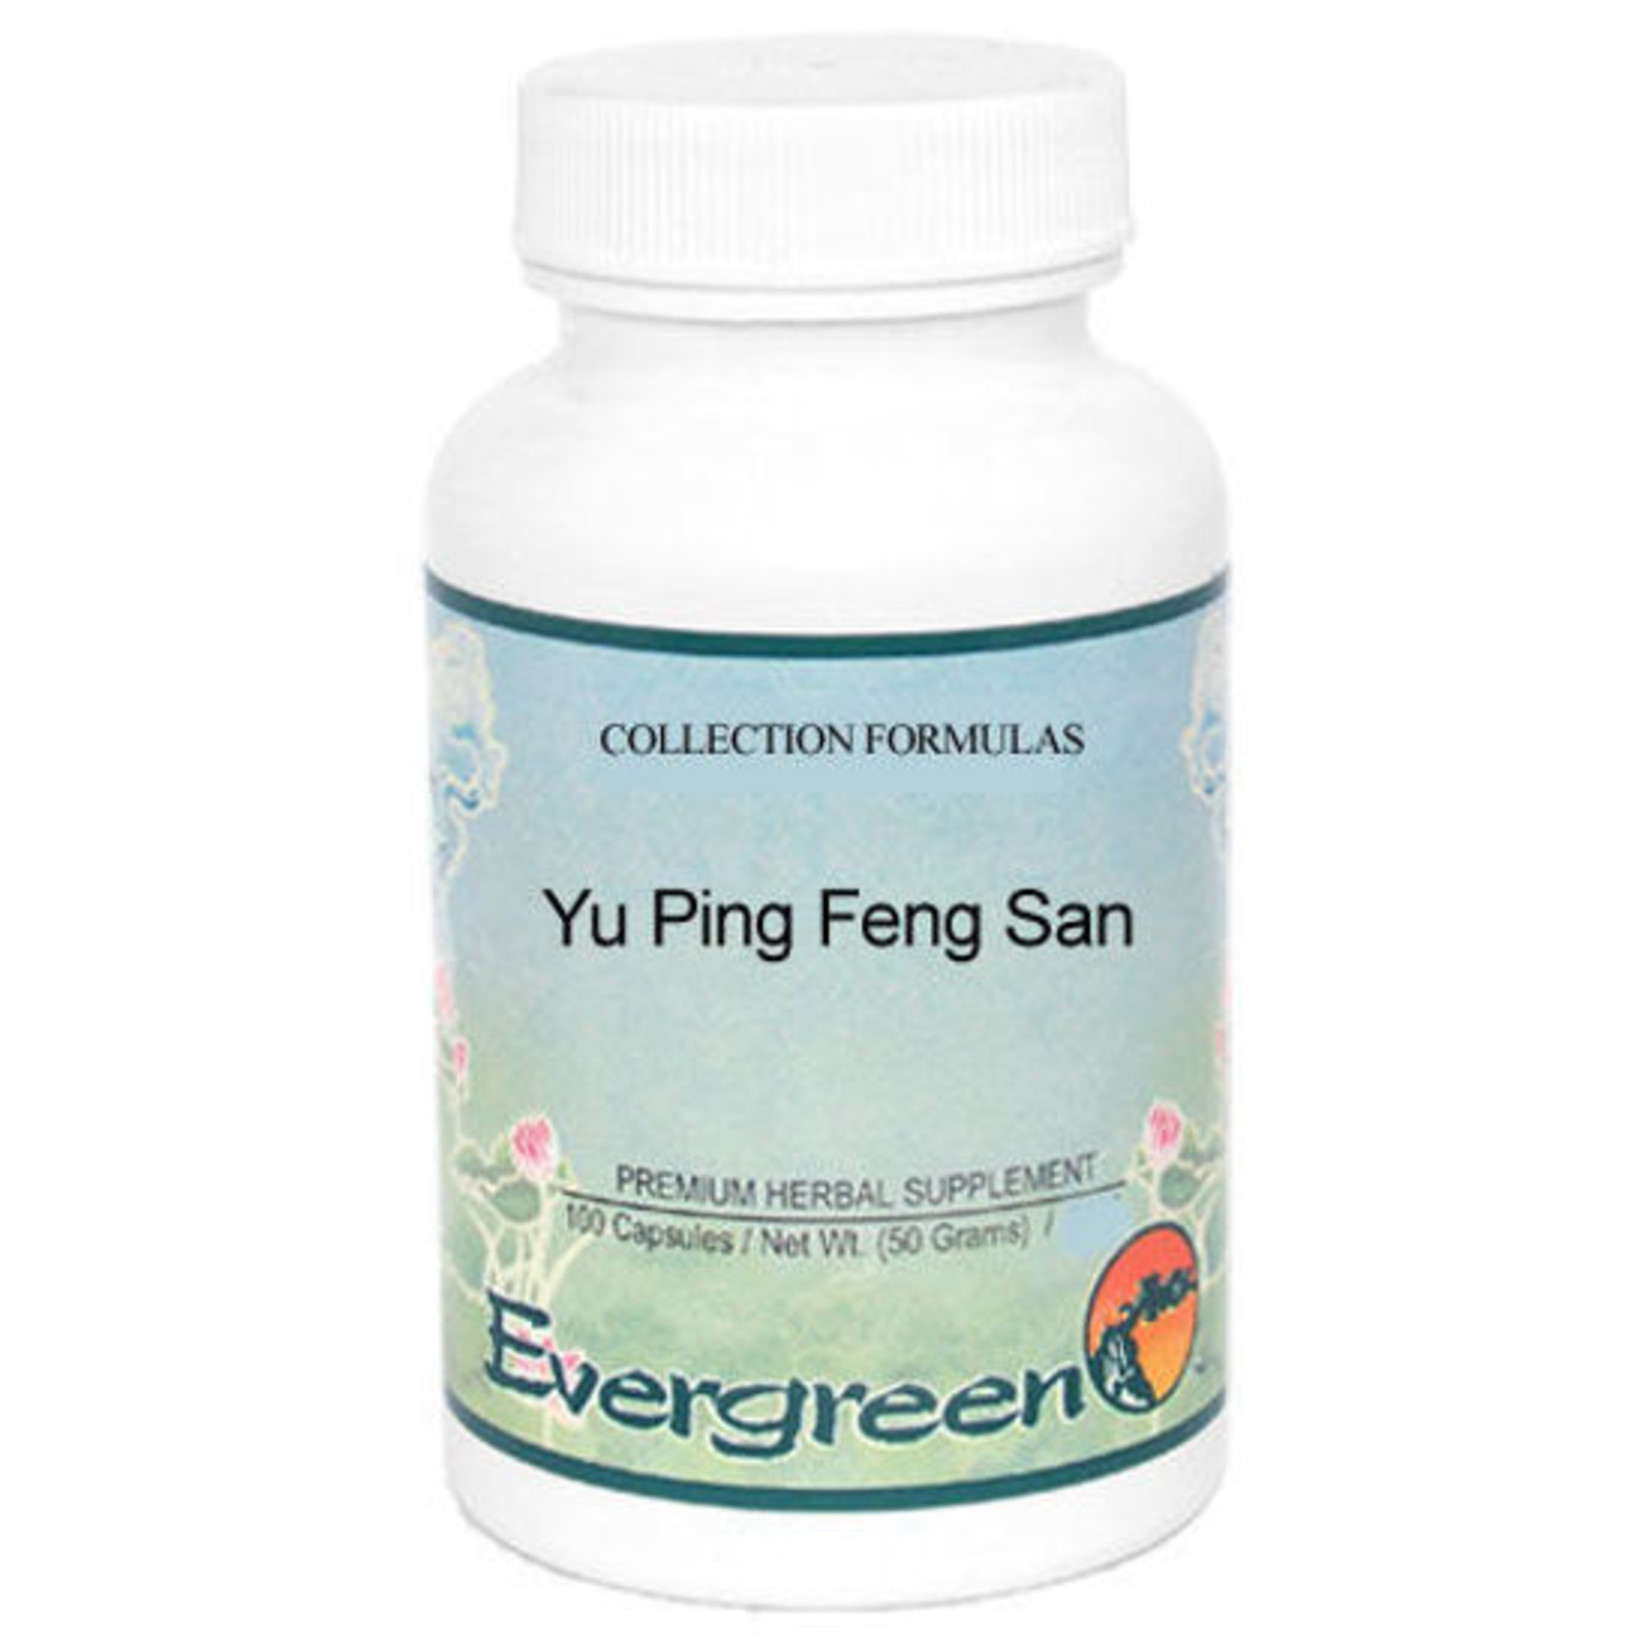 Yu Ping Feng San (Evergreen Herbs)